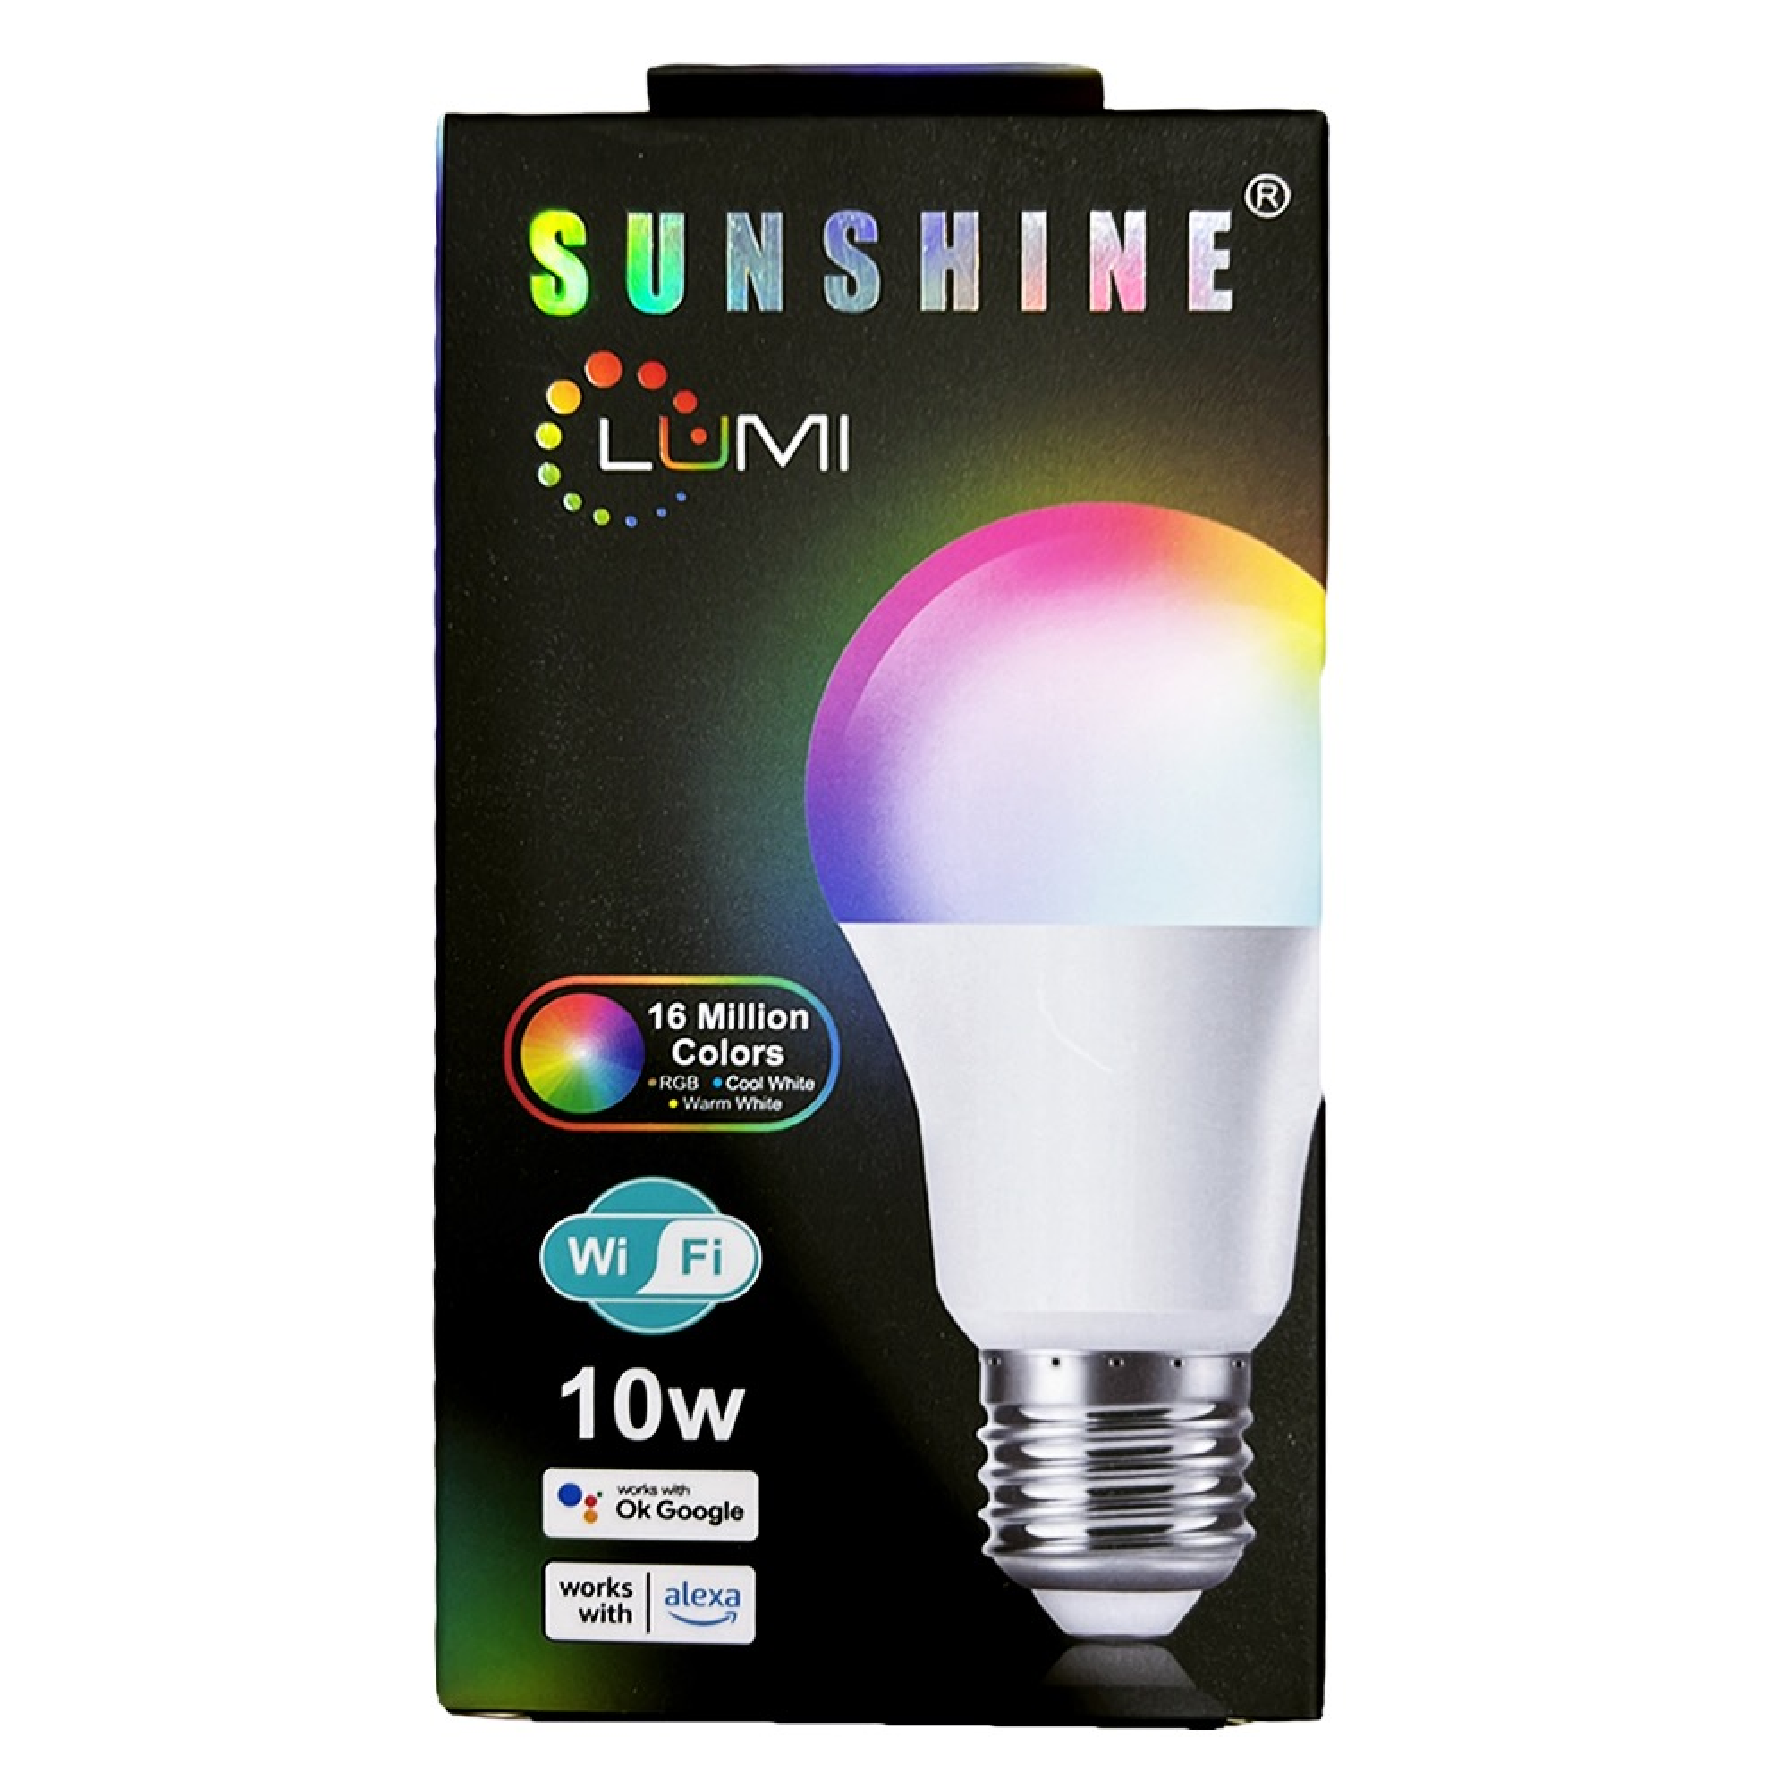 Sunshine LUMI Bulb LED Bulb 10W E27 Smartphone WIFI REMOTE 16 MILLION COLORS CHANGE